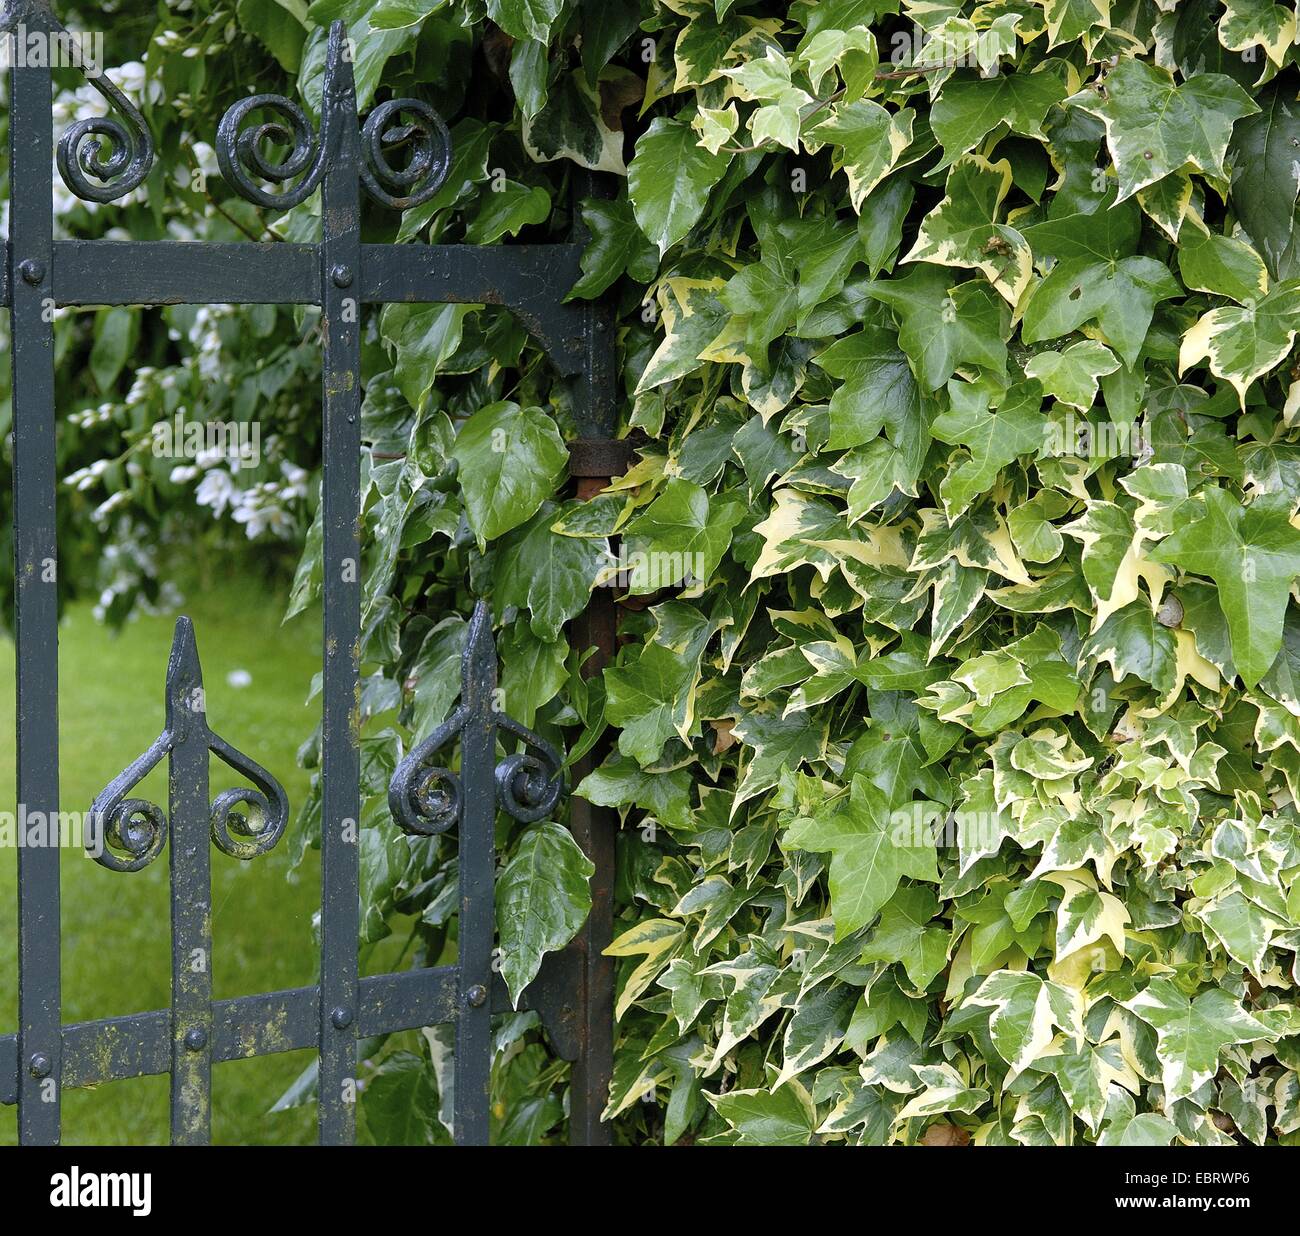 English ivy, common ivy (Hedera helix 'Goldchild', Hedera helix Goldchild), cultivar Goldchild entwining around a garden gate Stock Photo